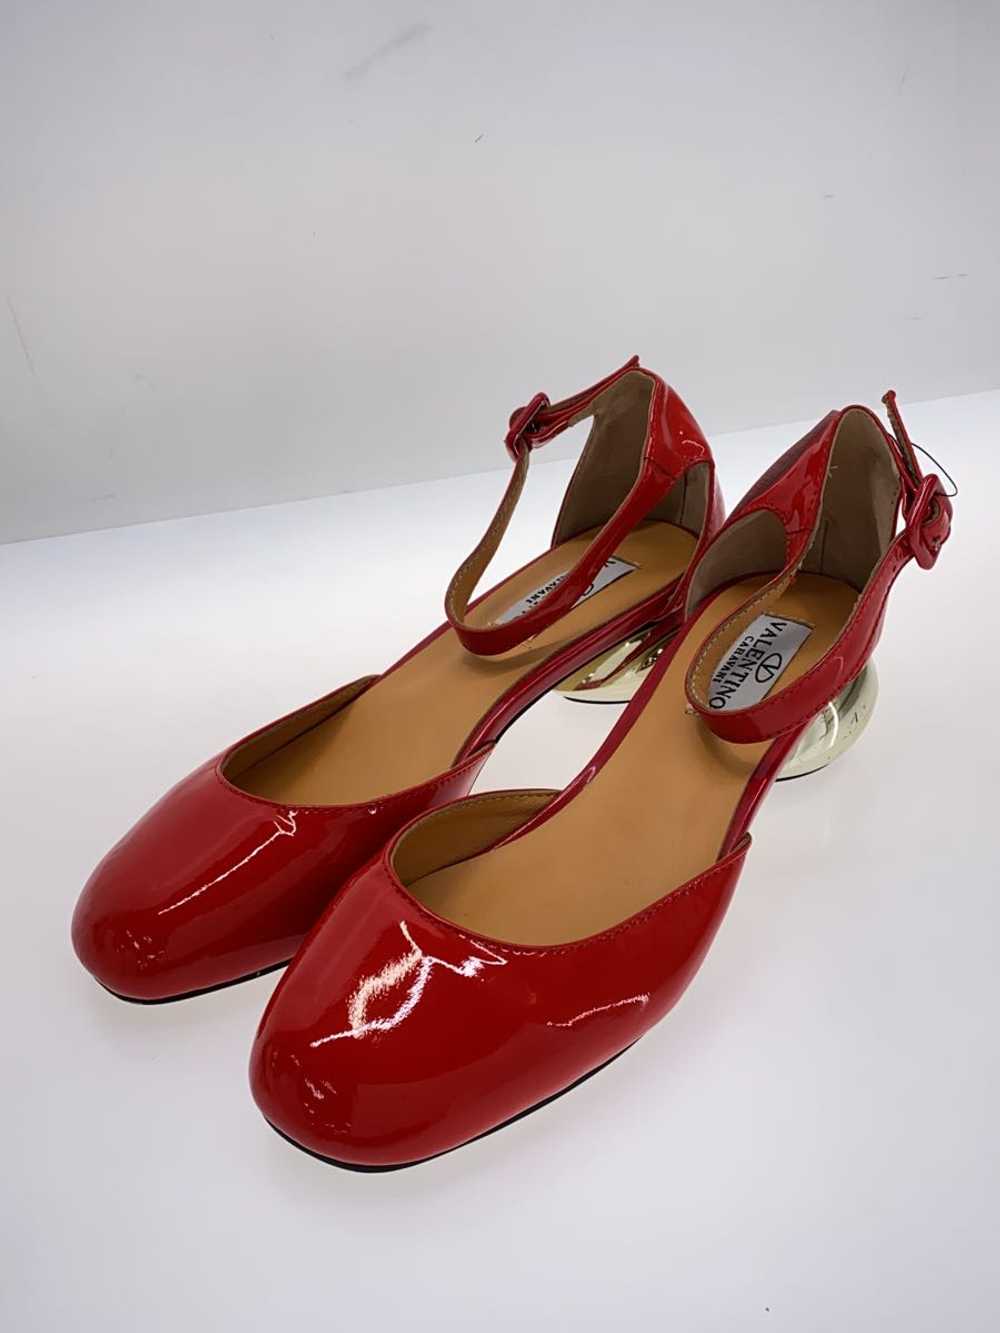 Valentino Garavani Pumps/38/Red/Enamel Shoes BiI84 - image 2